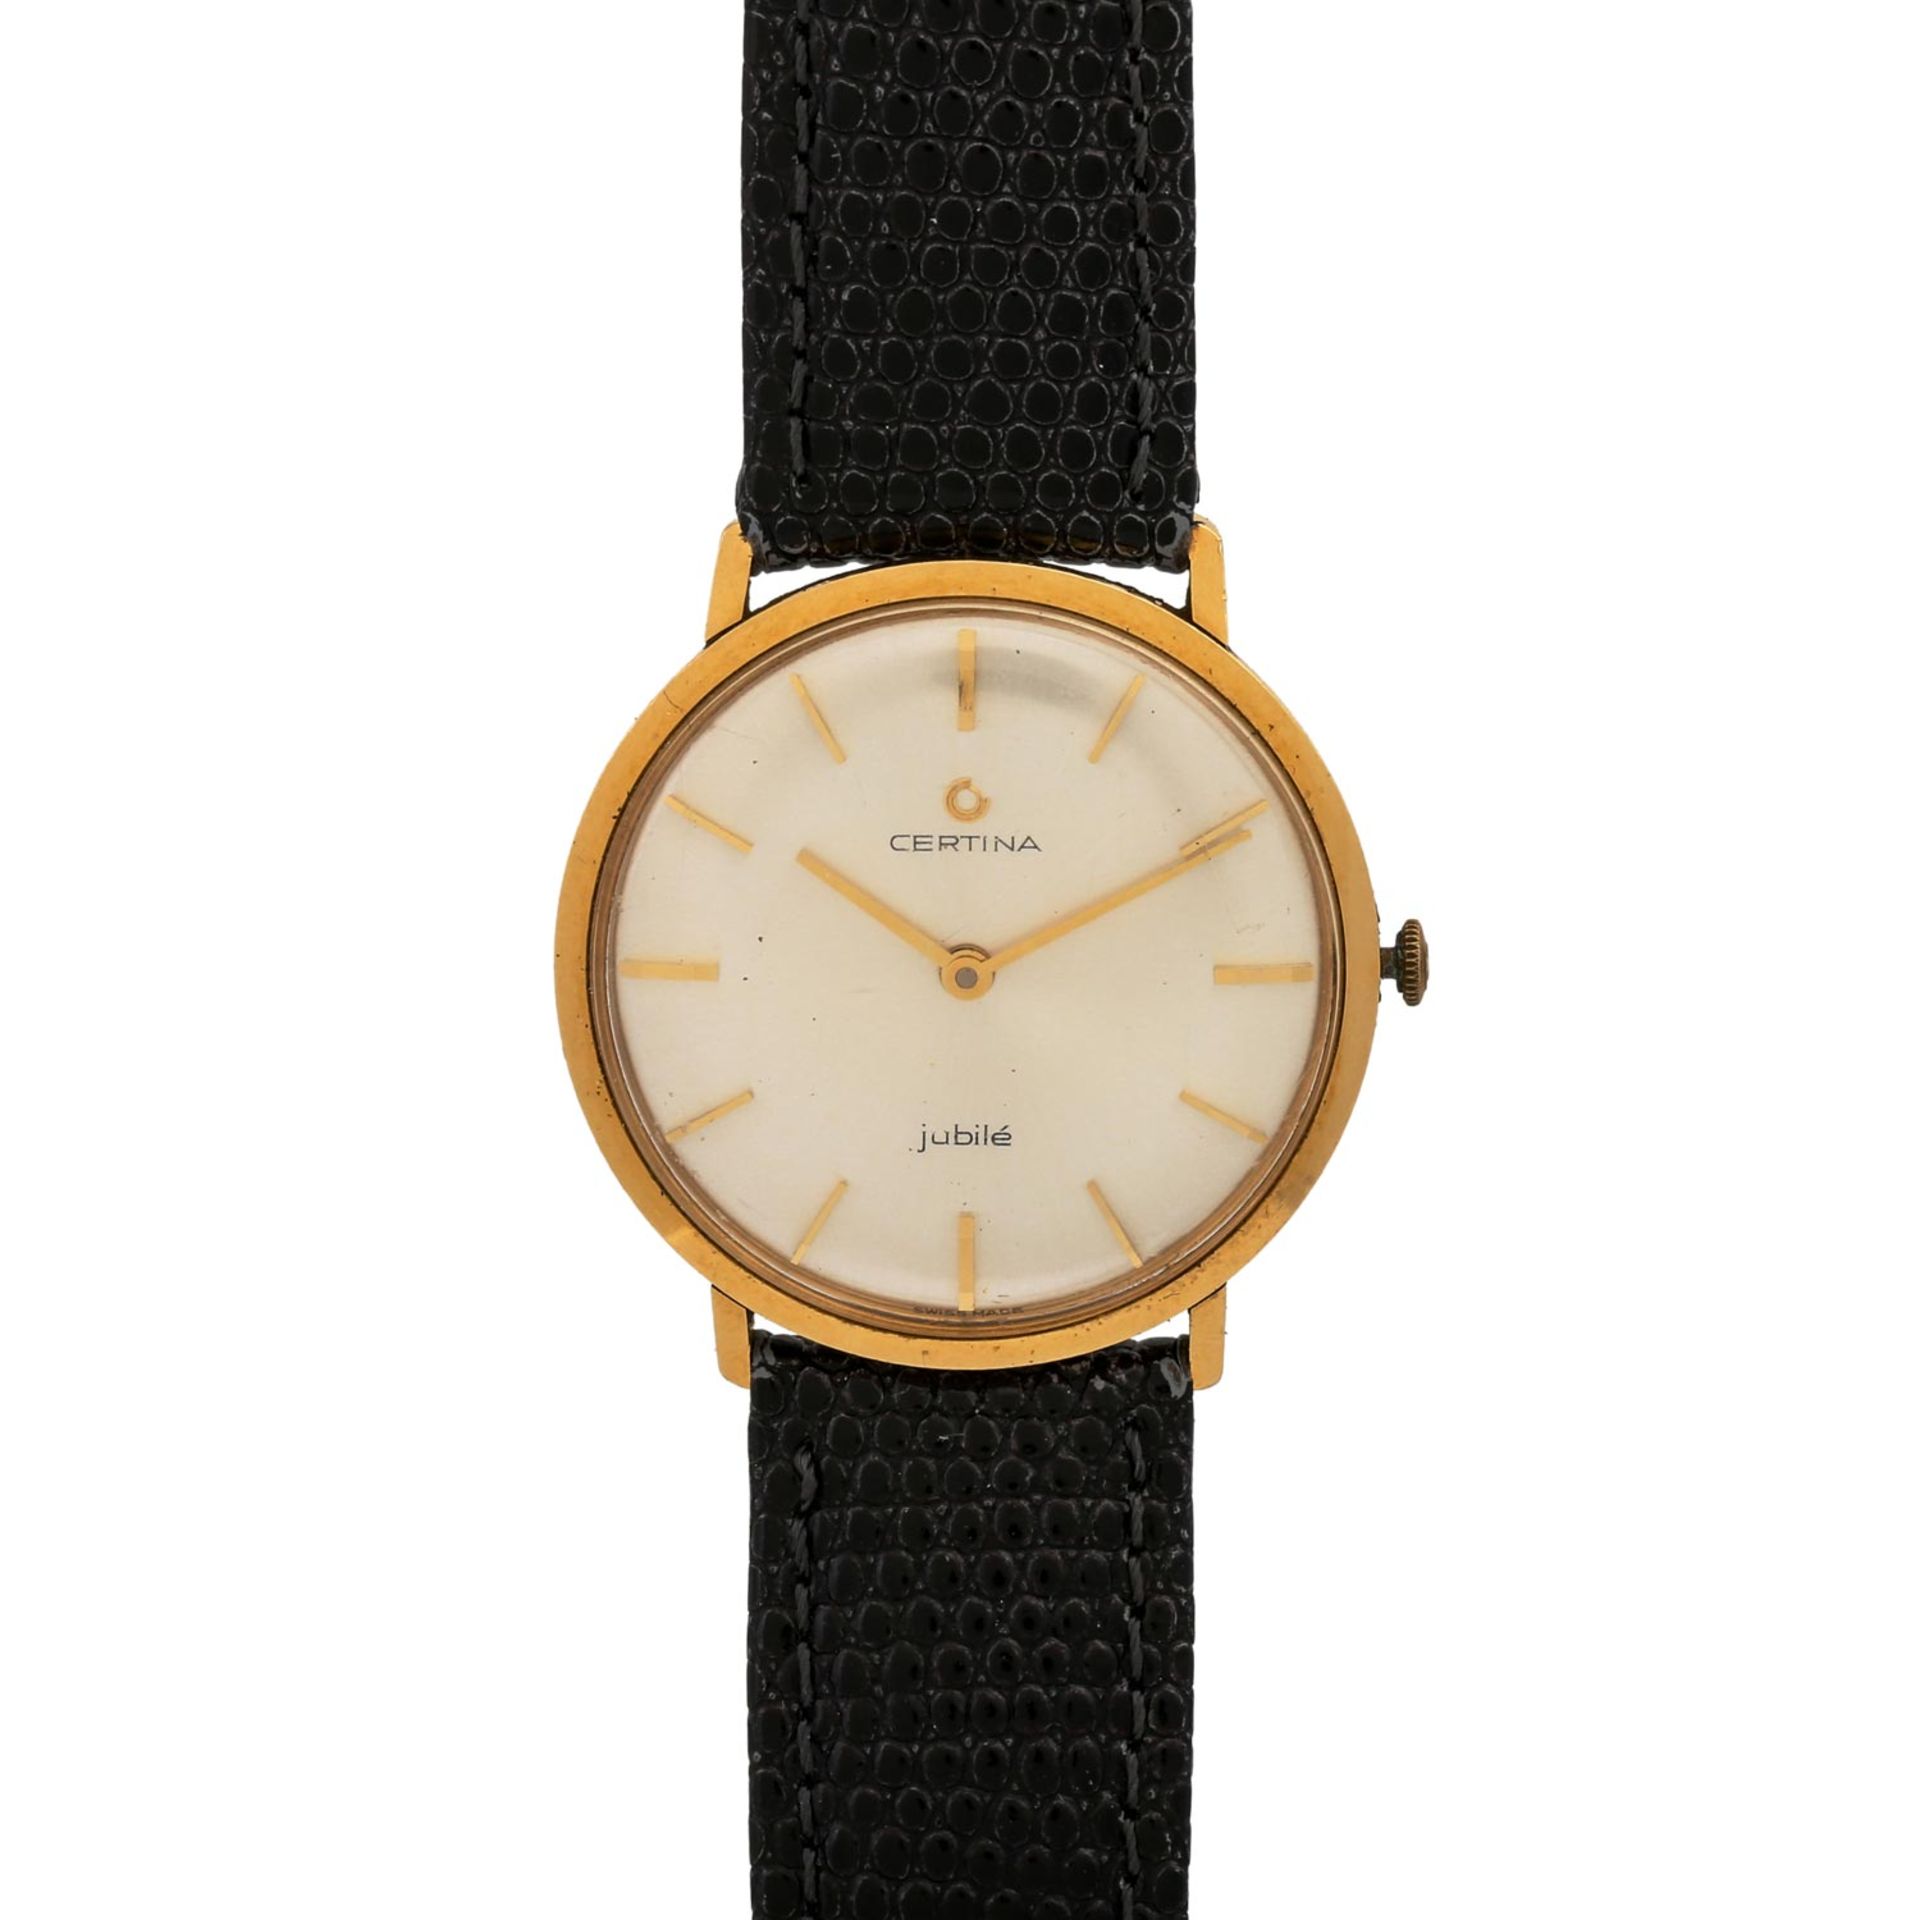 CERTINA Vintage Jubilé Armbanduhr.Gold 18K. Handaufzug-Werk. Lederband mit Stiftschli